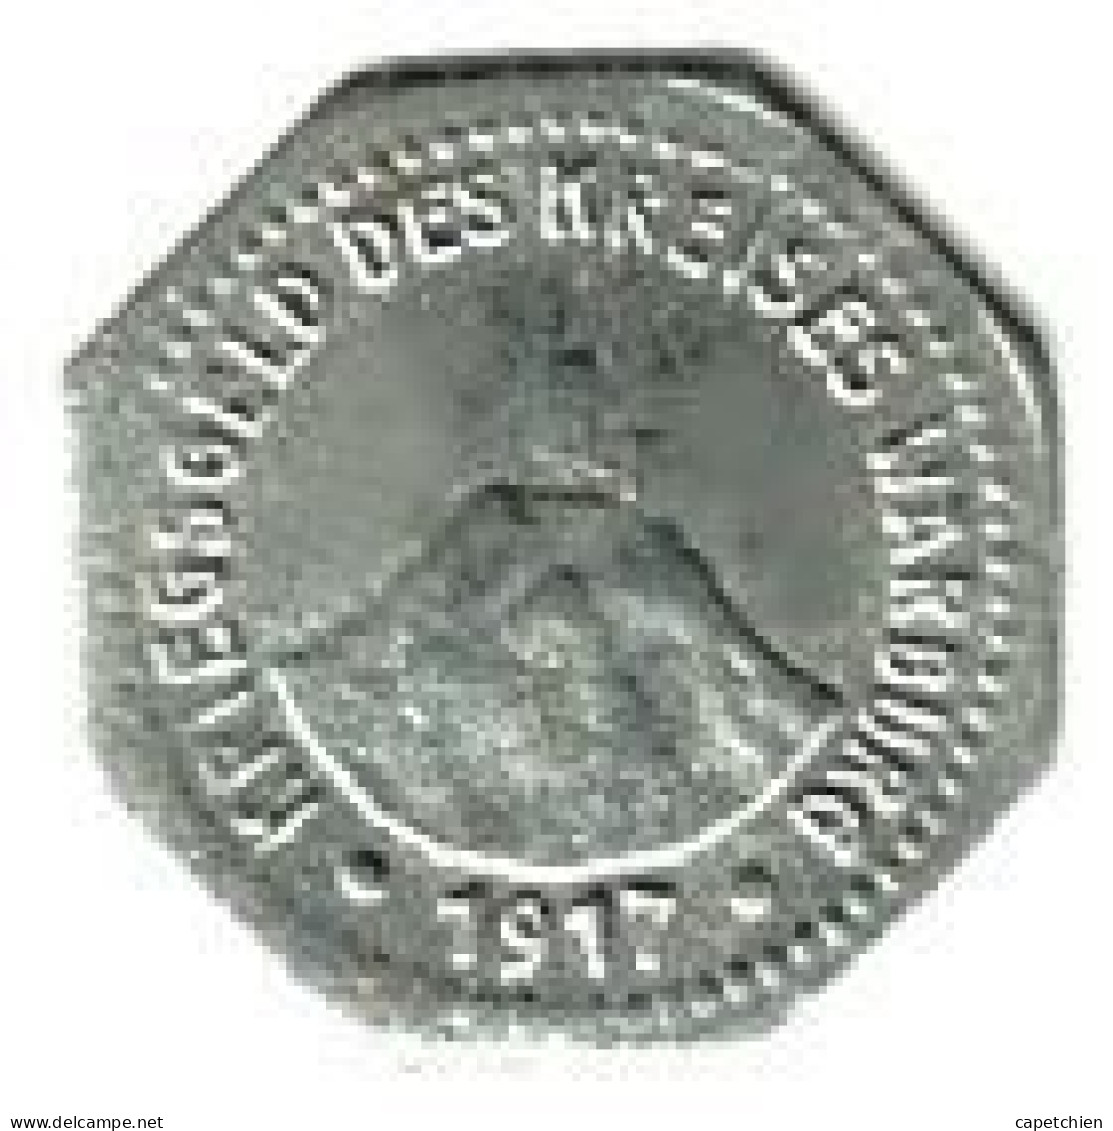 ALLEMAGNE / NOTGELD / KREISES WARBURG  / 10 PFENNIG / 1917 / FER / 20.7 Mm  / 2.57 G / ETAT TTB - Monétaires/De Nécessité